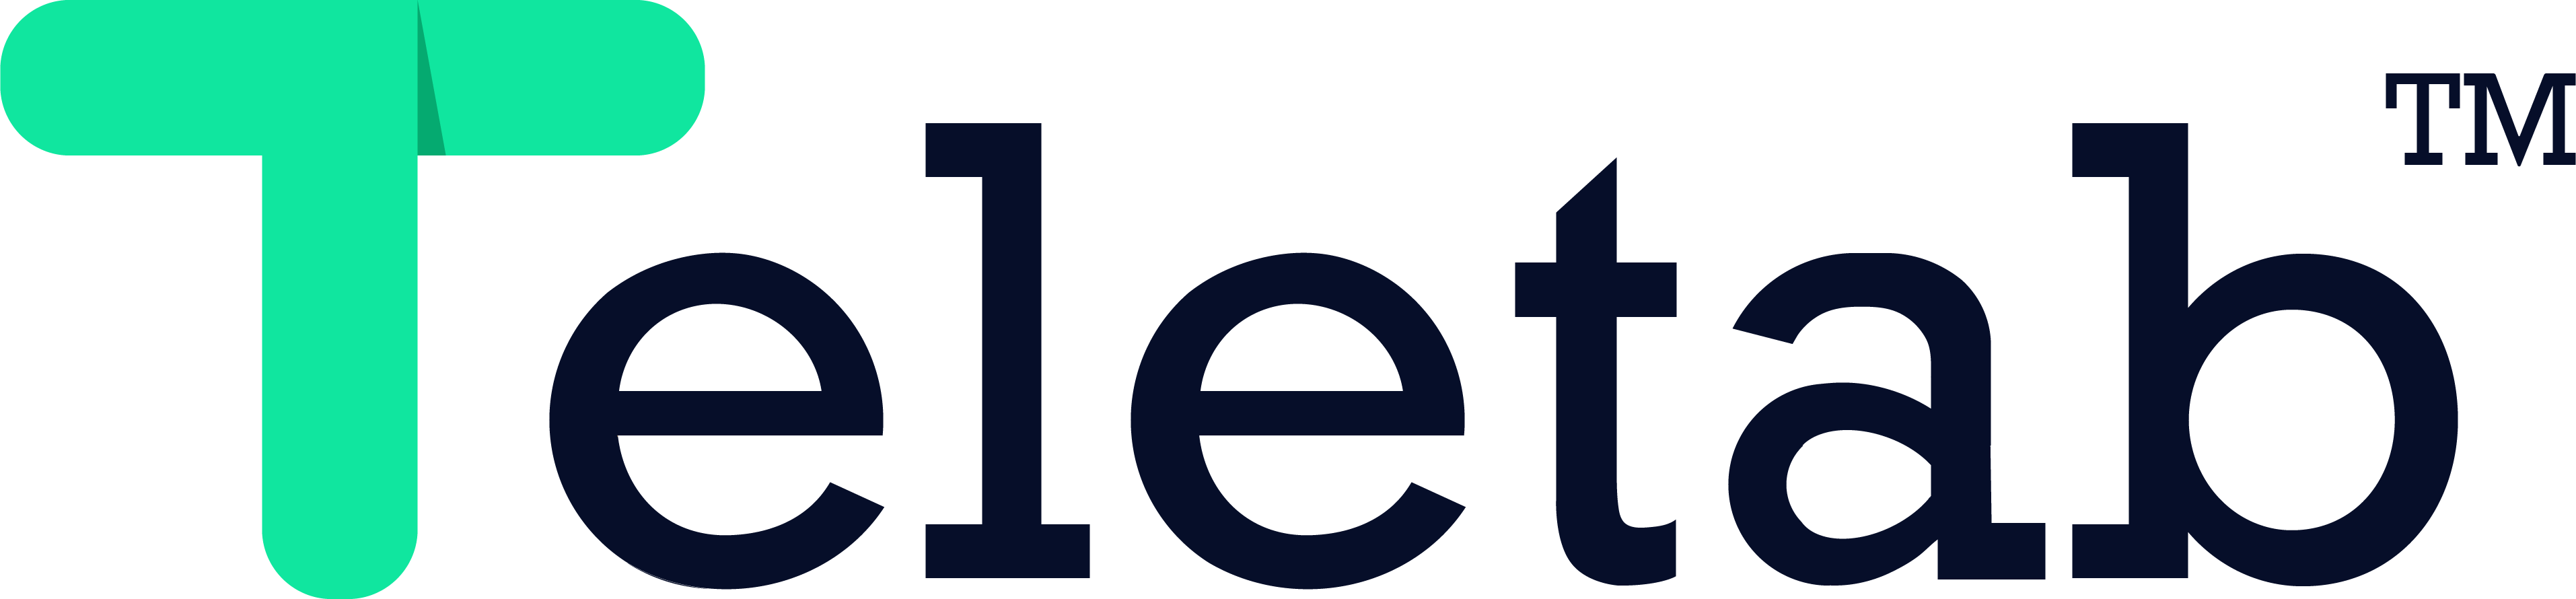 Teletab - #1 App Marketing Agency